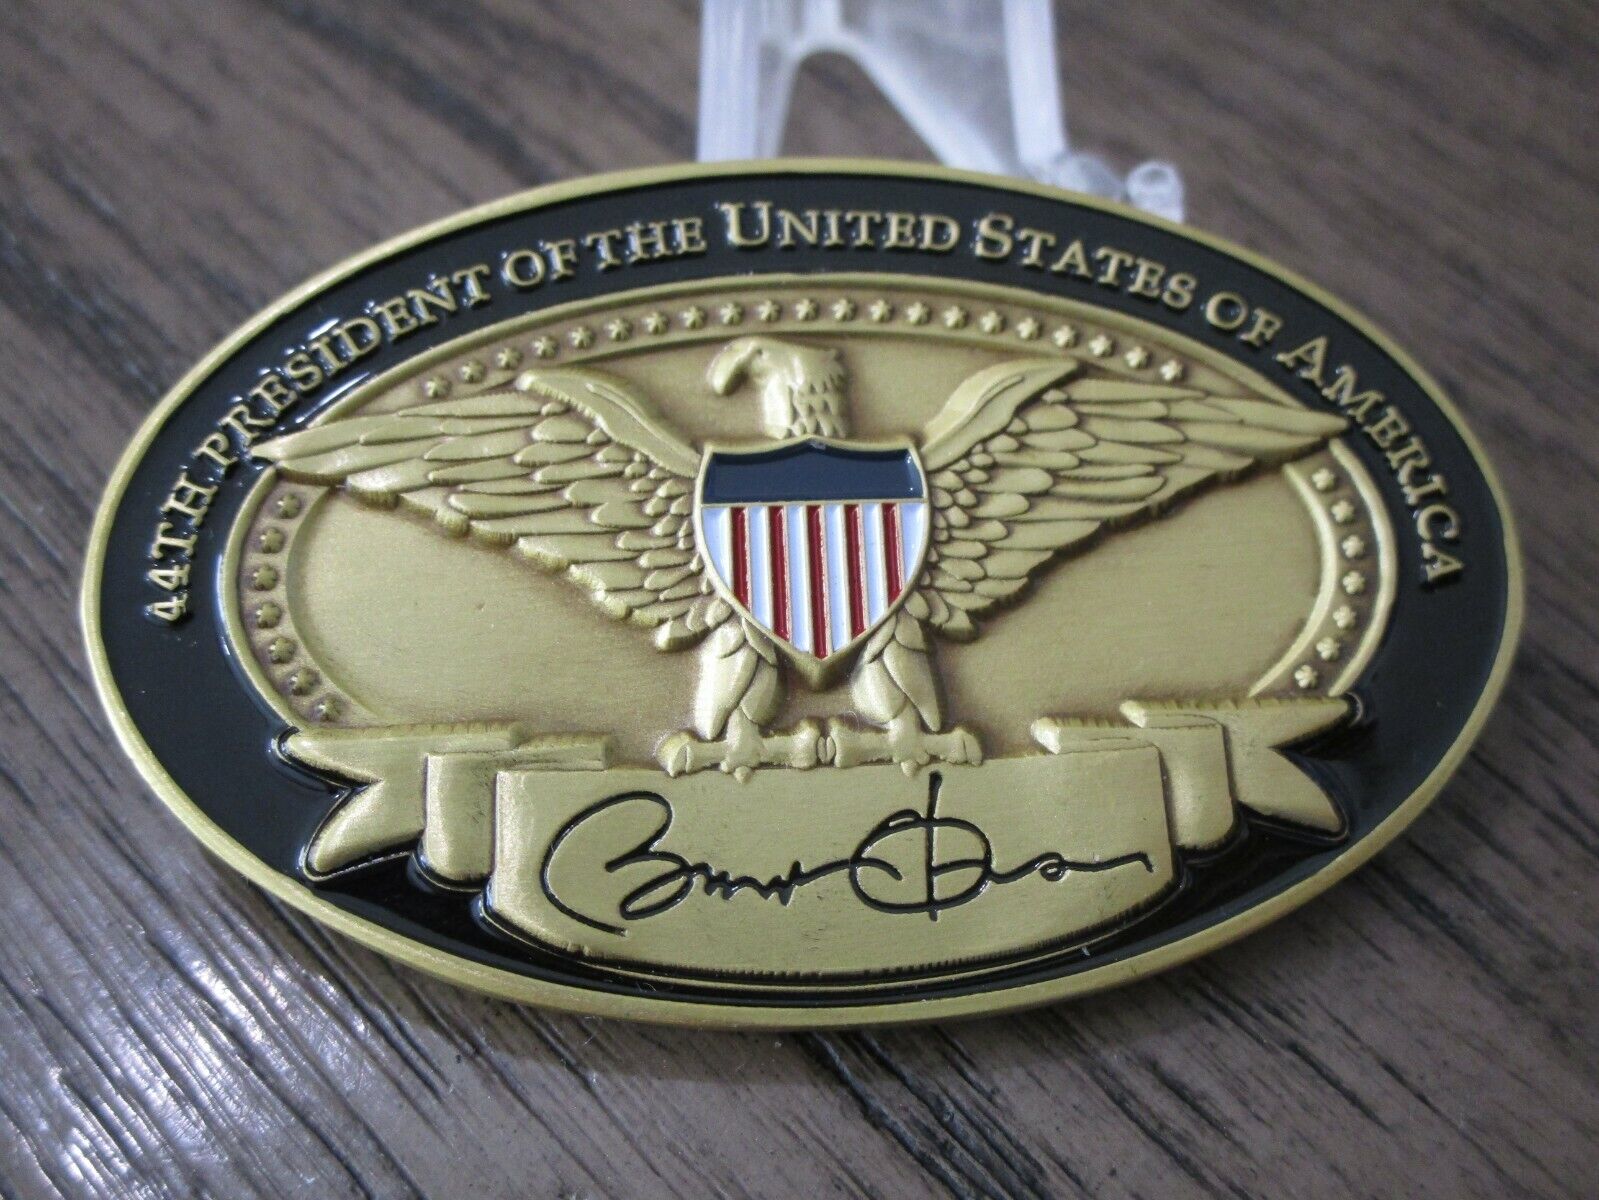 Barack Obama 44th President Of The United States POTUS Challenge Coin